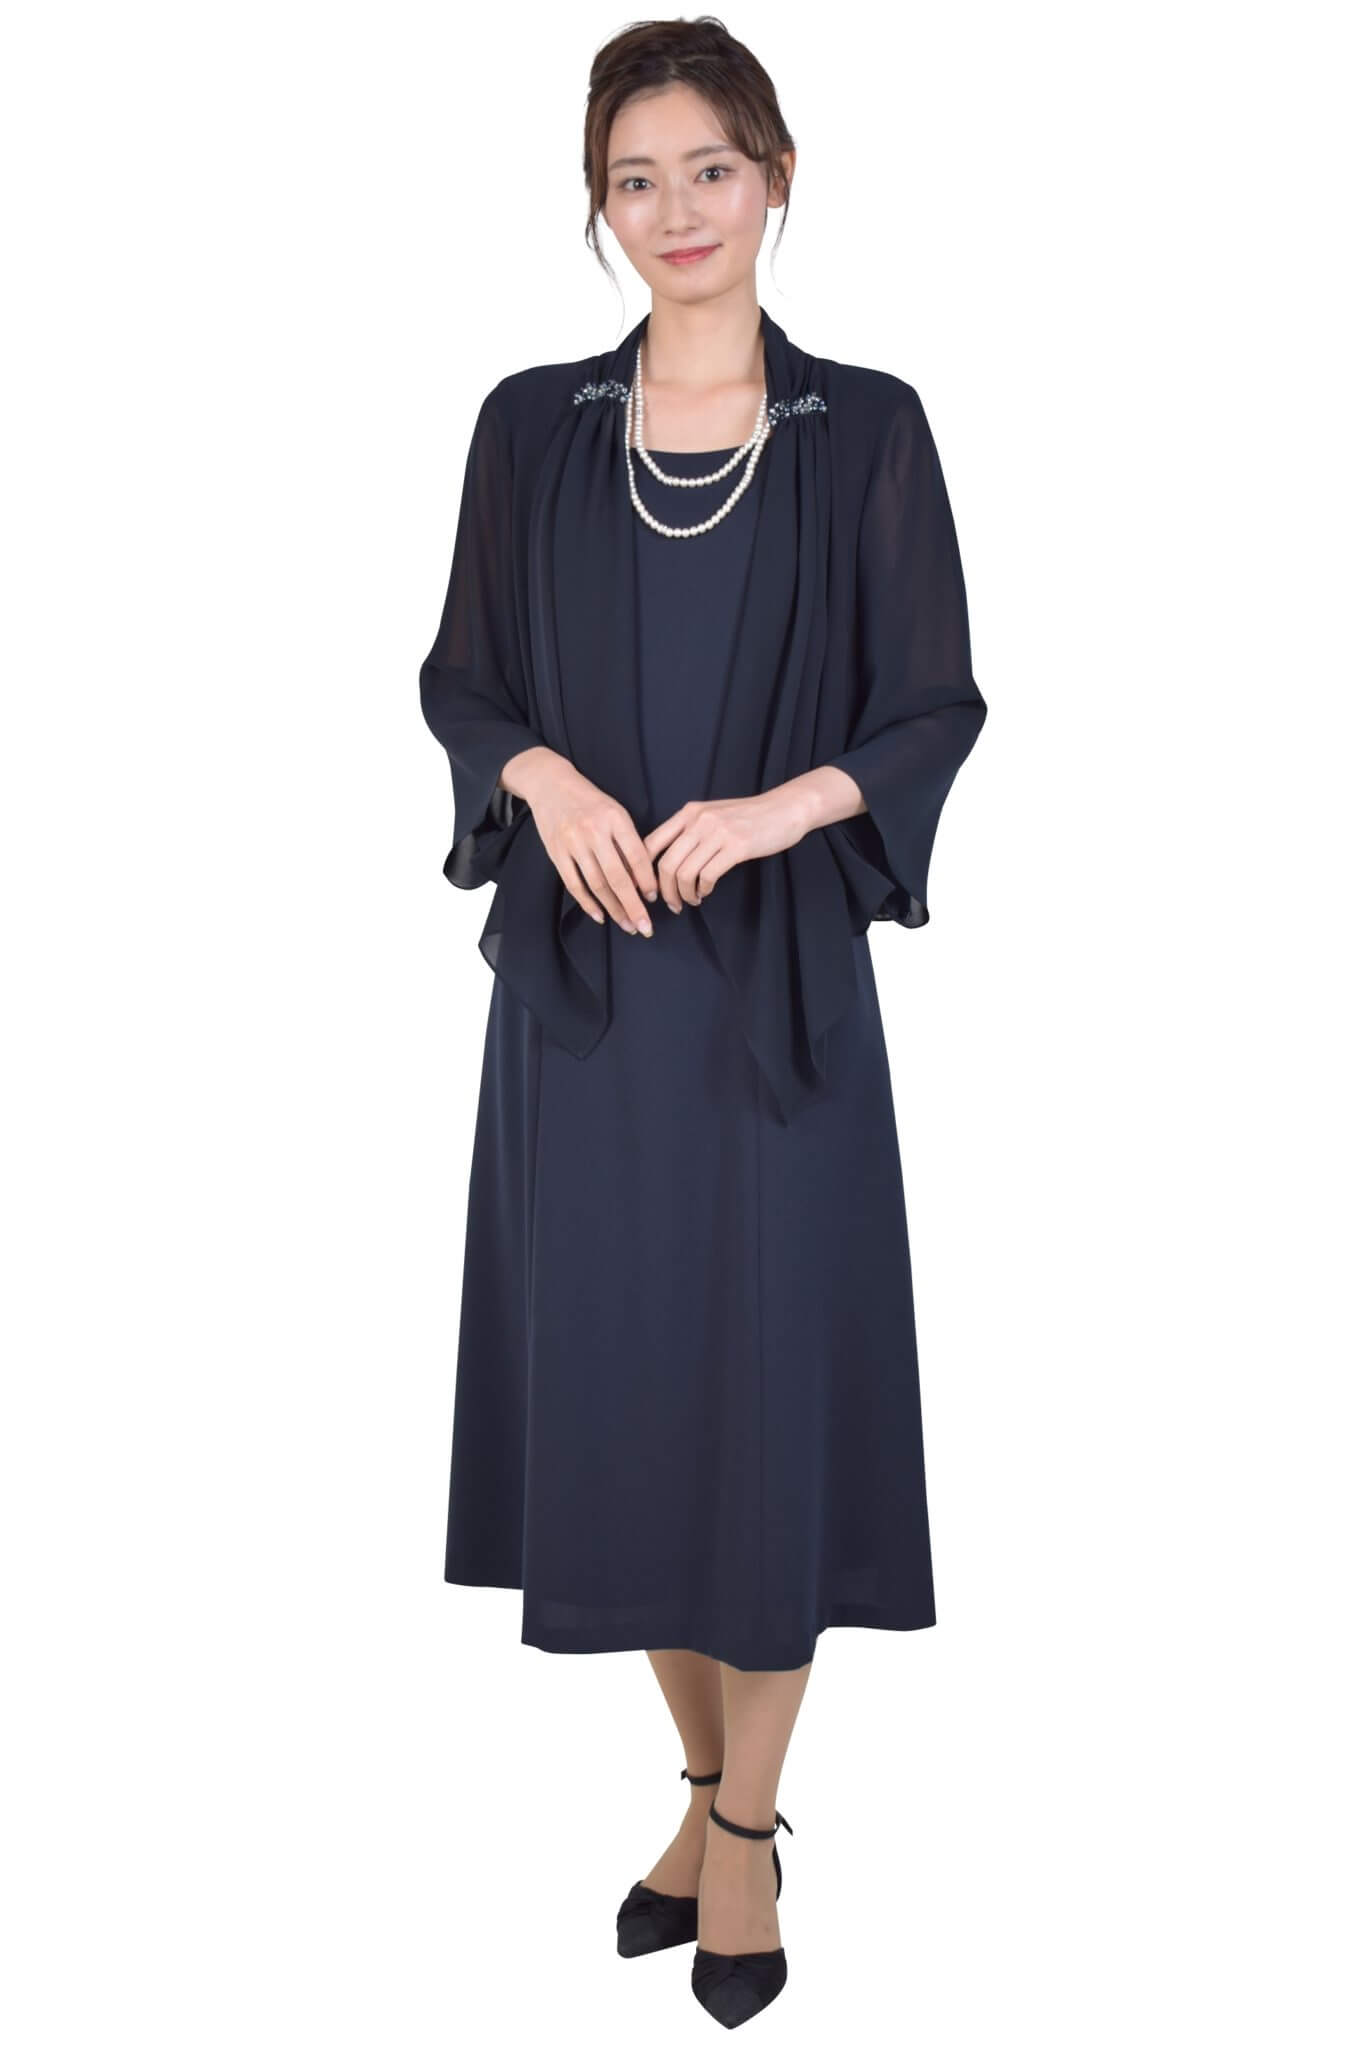 Yukiko Kimijima 東京ソワール羽織付き風濃ネイビーミモレ丈ドレス